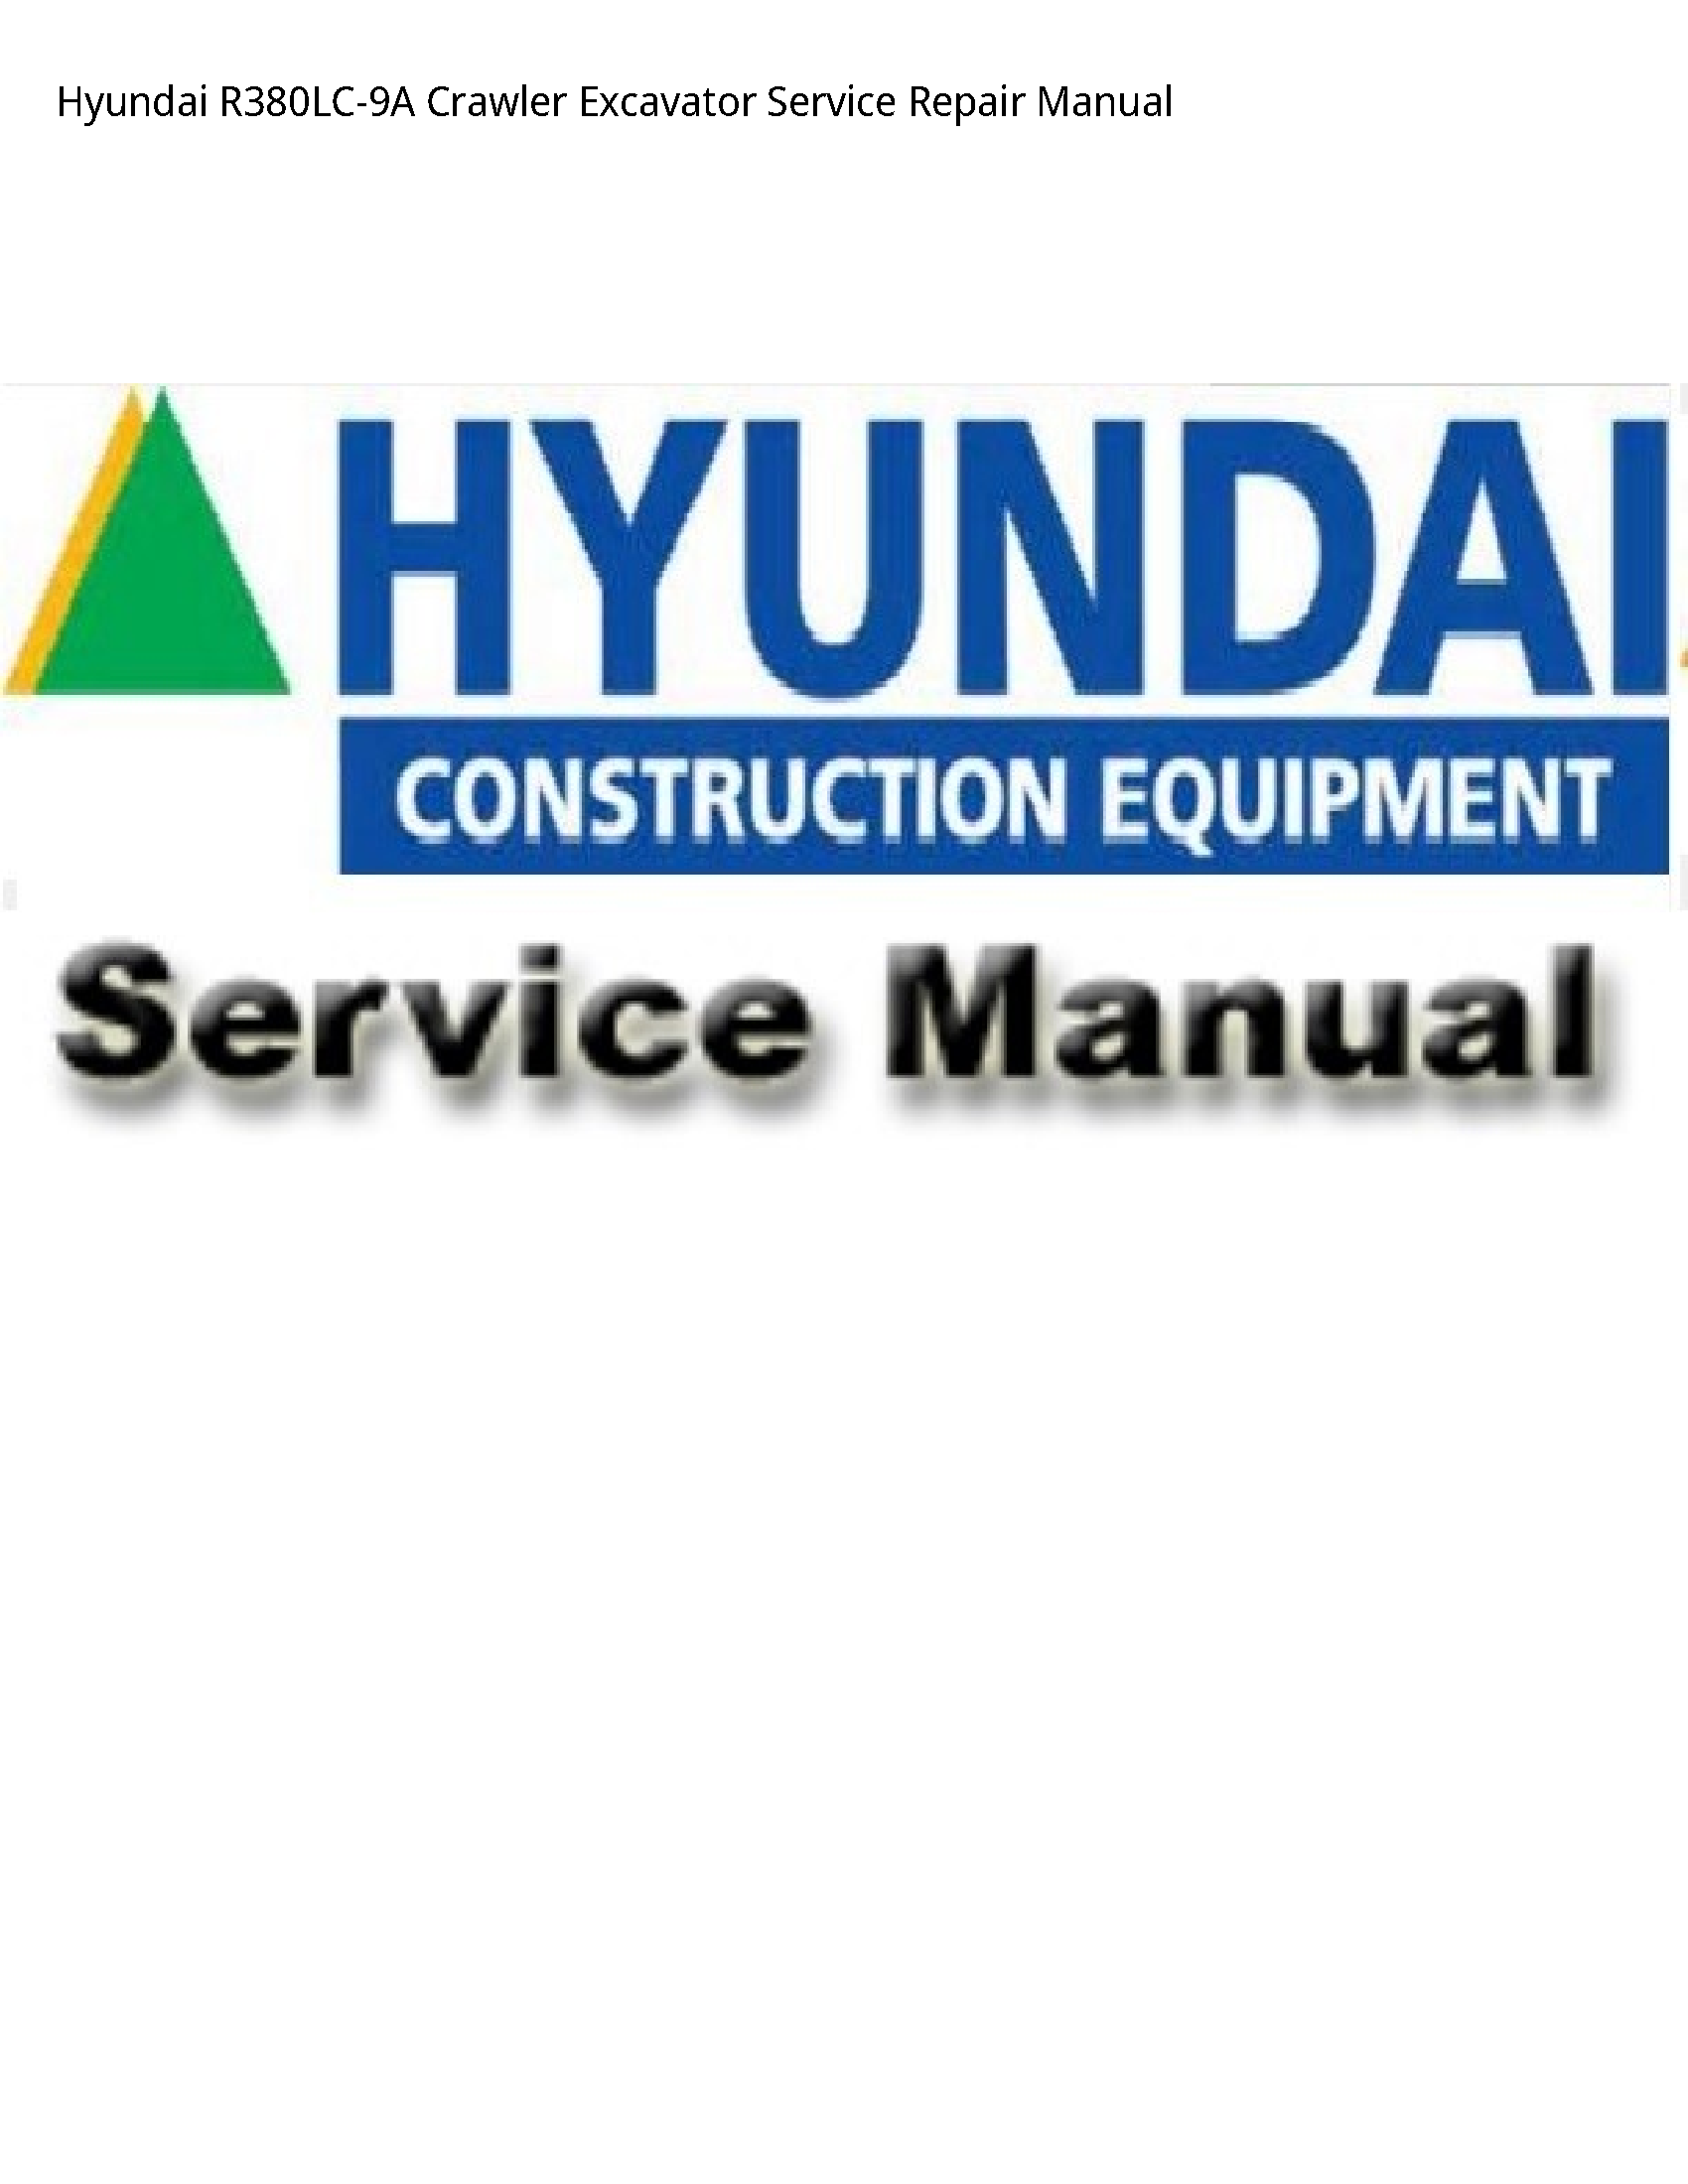 Hyundai R380LC-9A Crawler Excavator manual